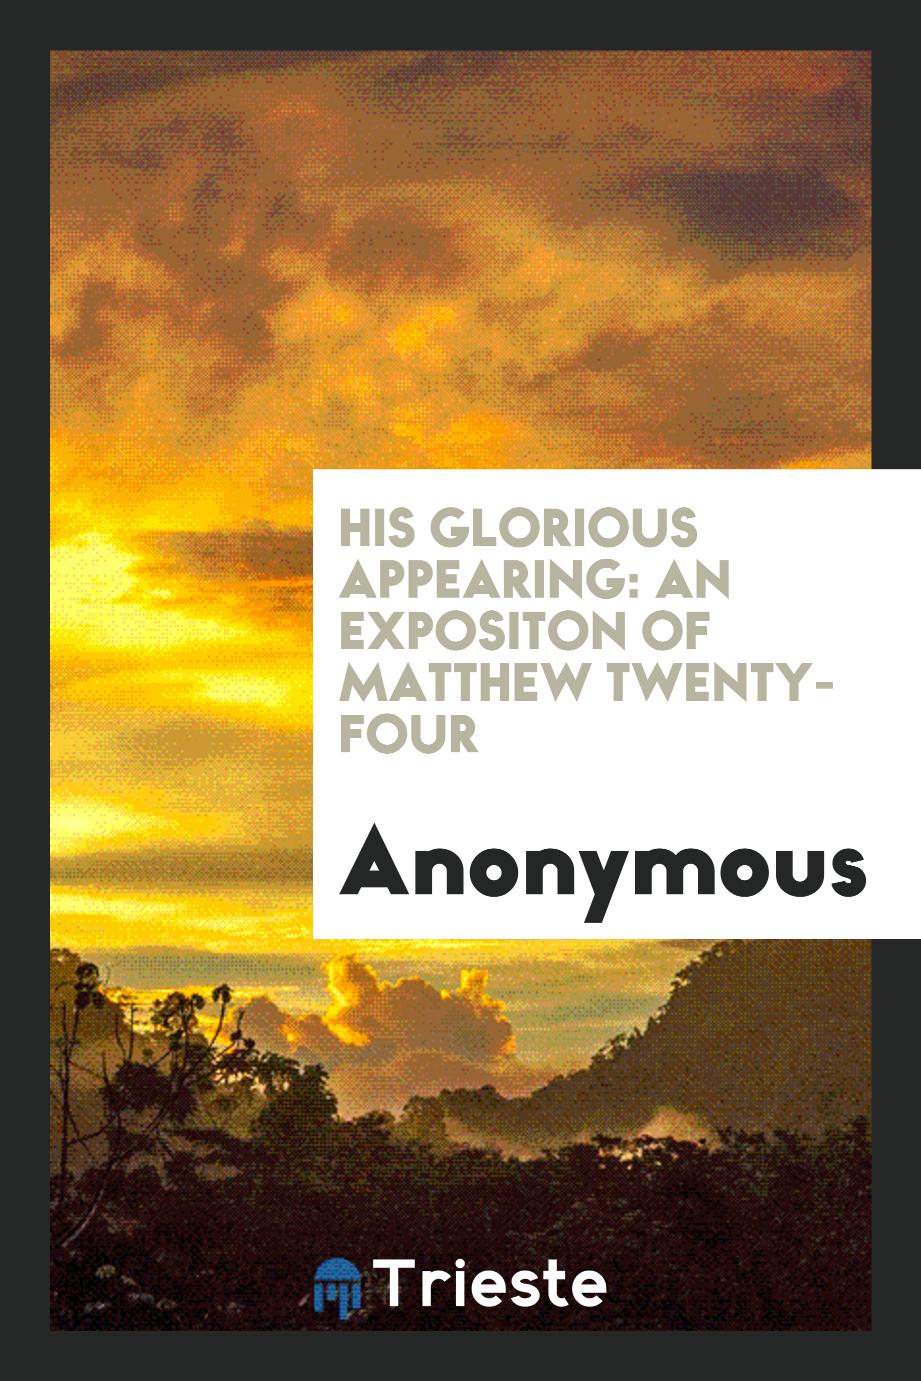 His Glorious Appearing: An Expositon of Matthew Twenty-Four